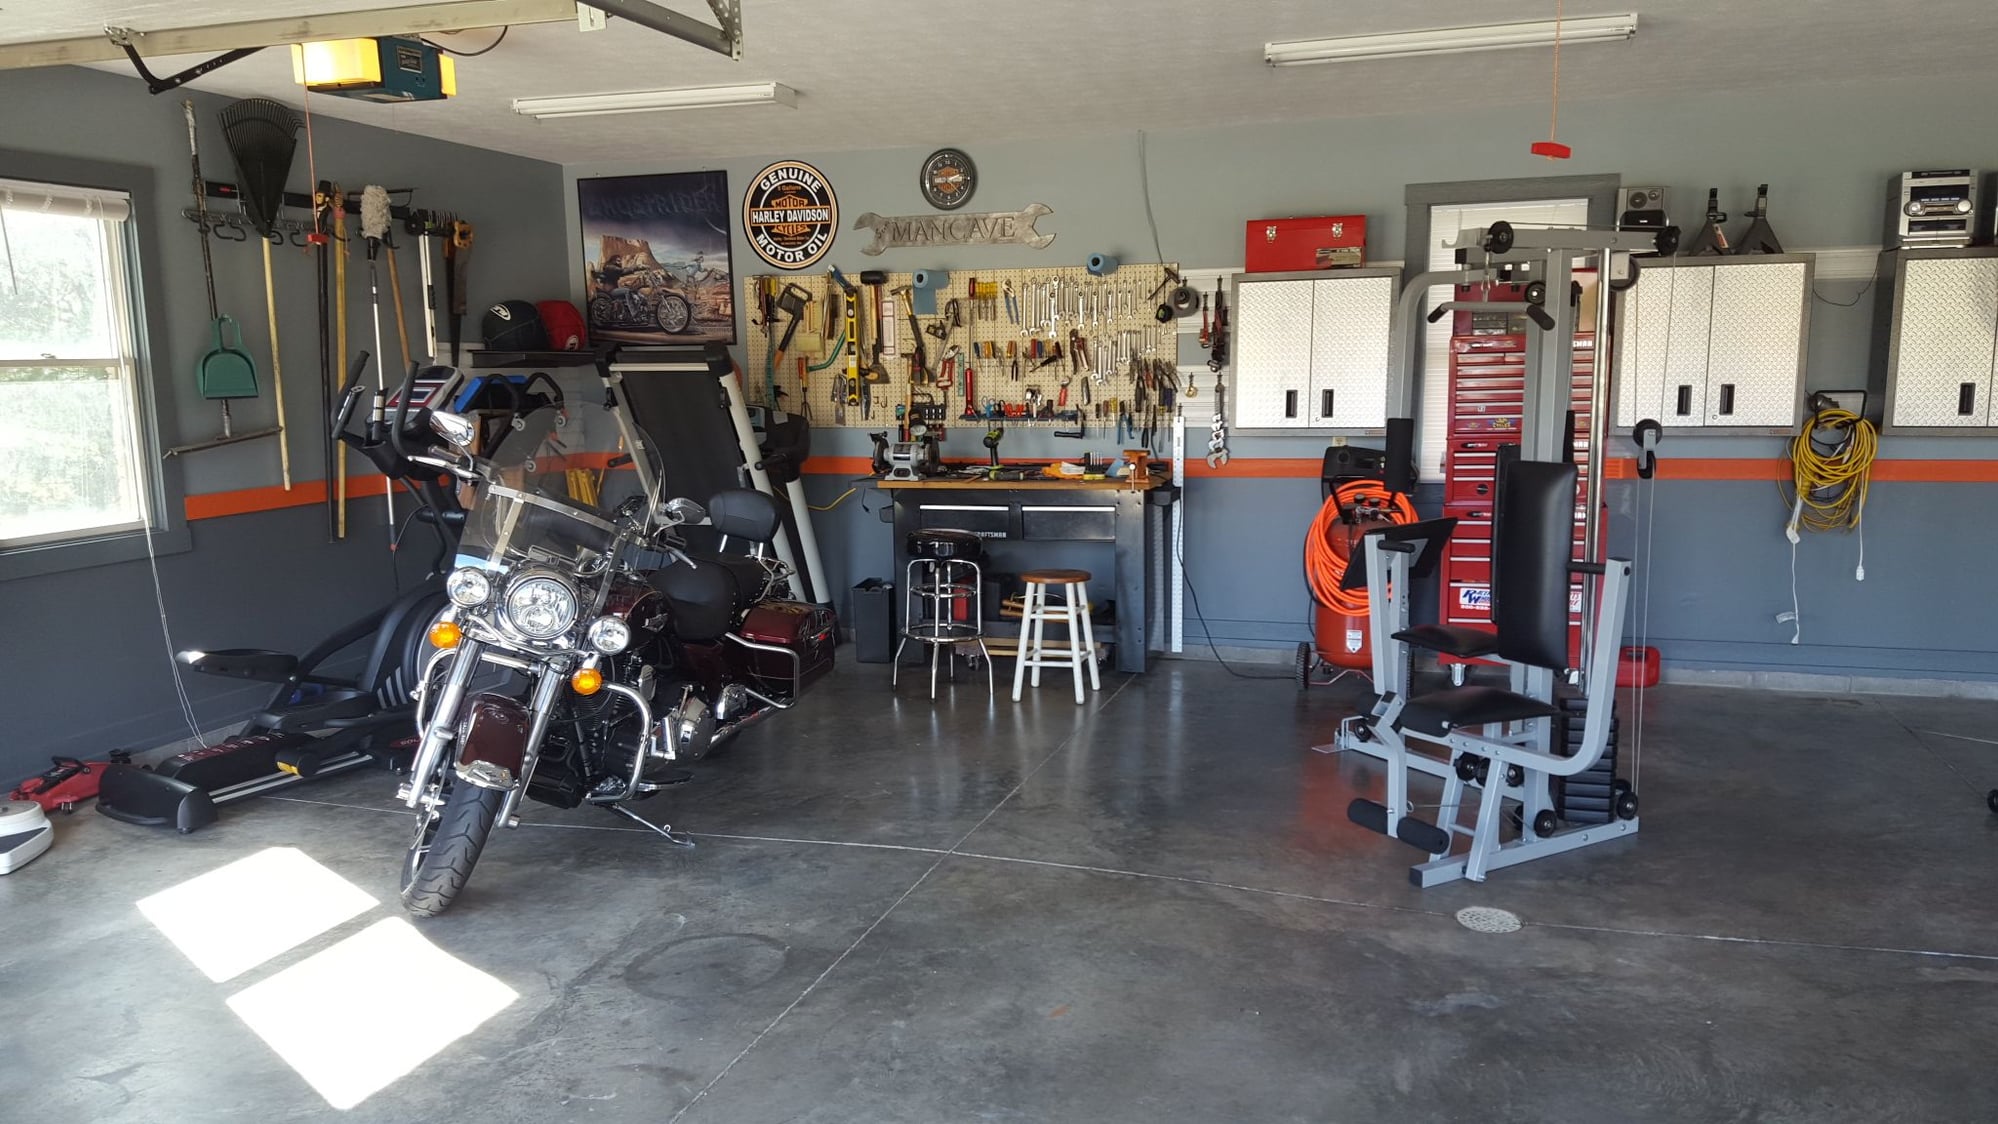 Lets see your Garage/Harley's Home. - Page 46 - Harley Davidson Forums